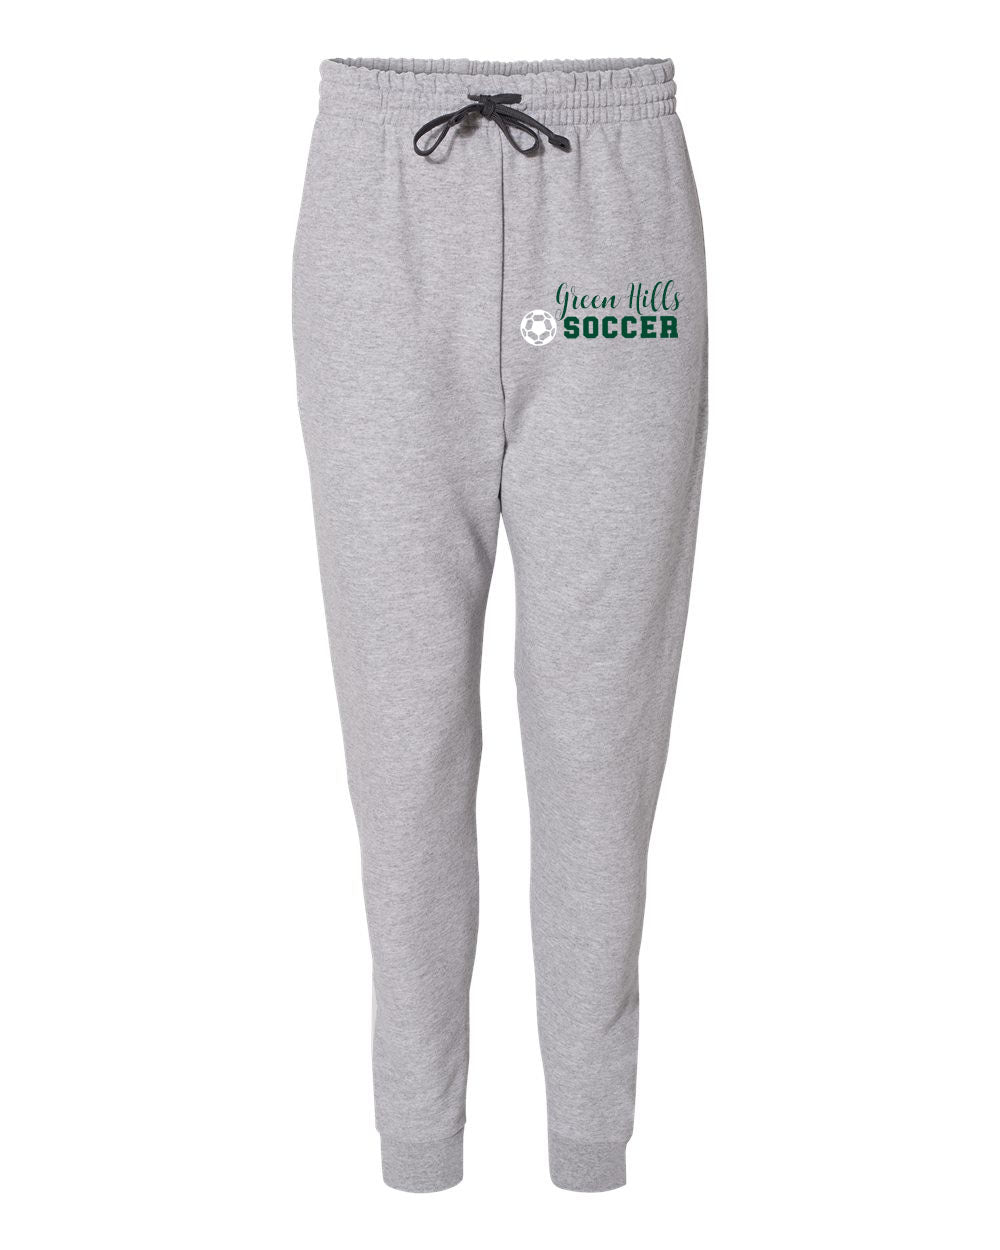 Green Hills Soccer design 2 Sweatpants